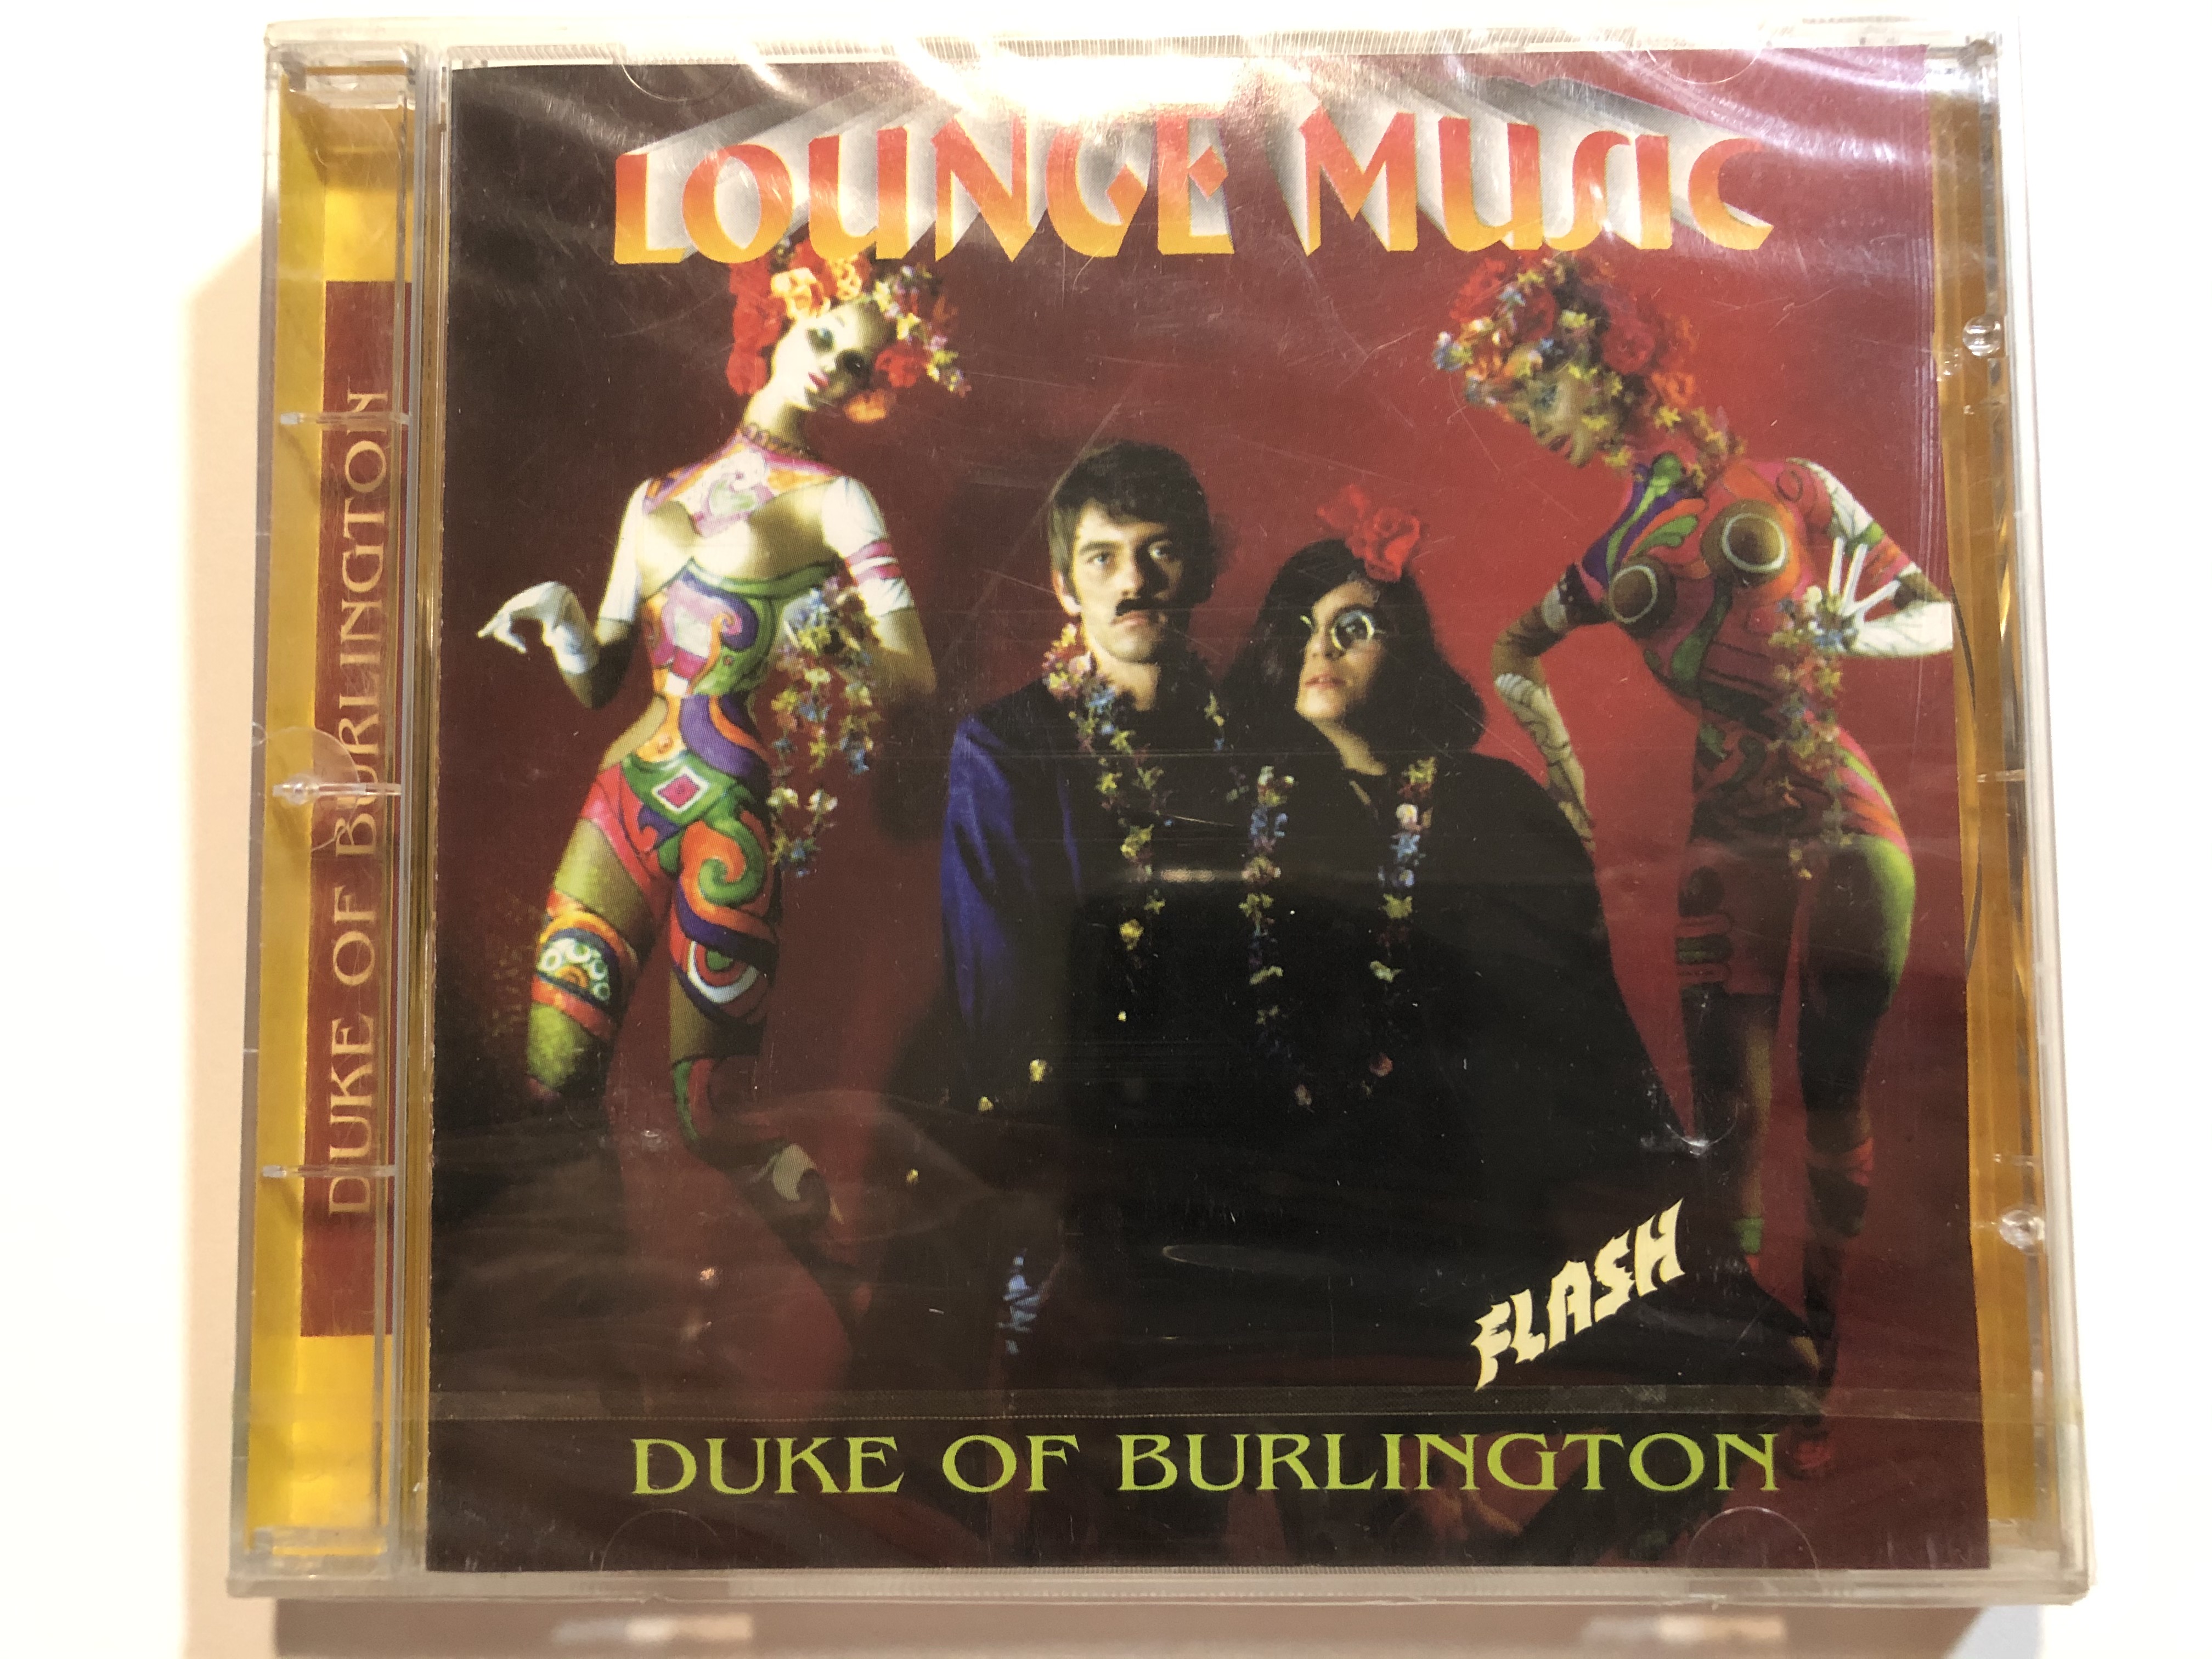 The Duke Of Burlington – Flash / Lounge Music Audio CD 2002 / CD 2805 -  bibleinmylanguage